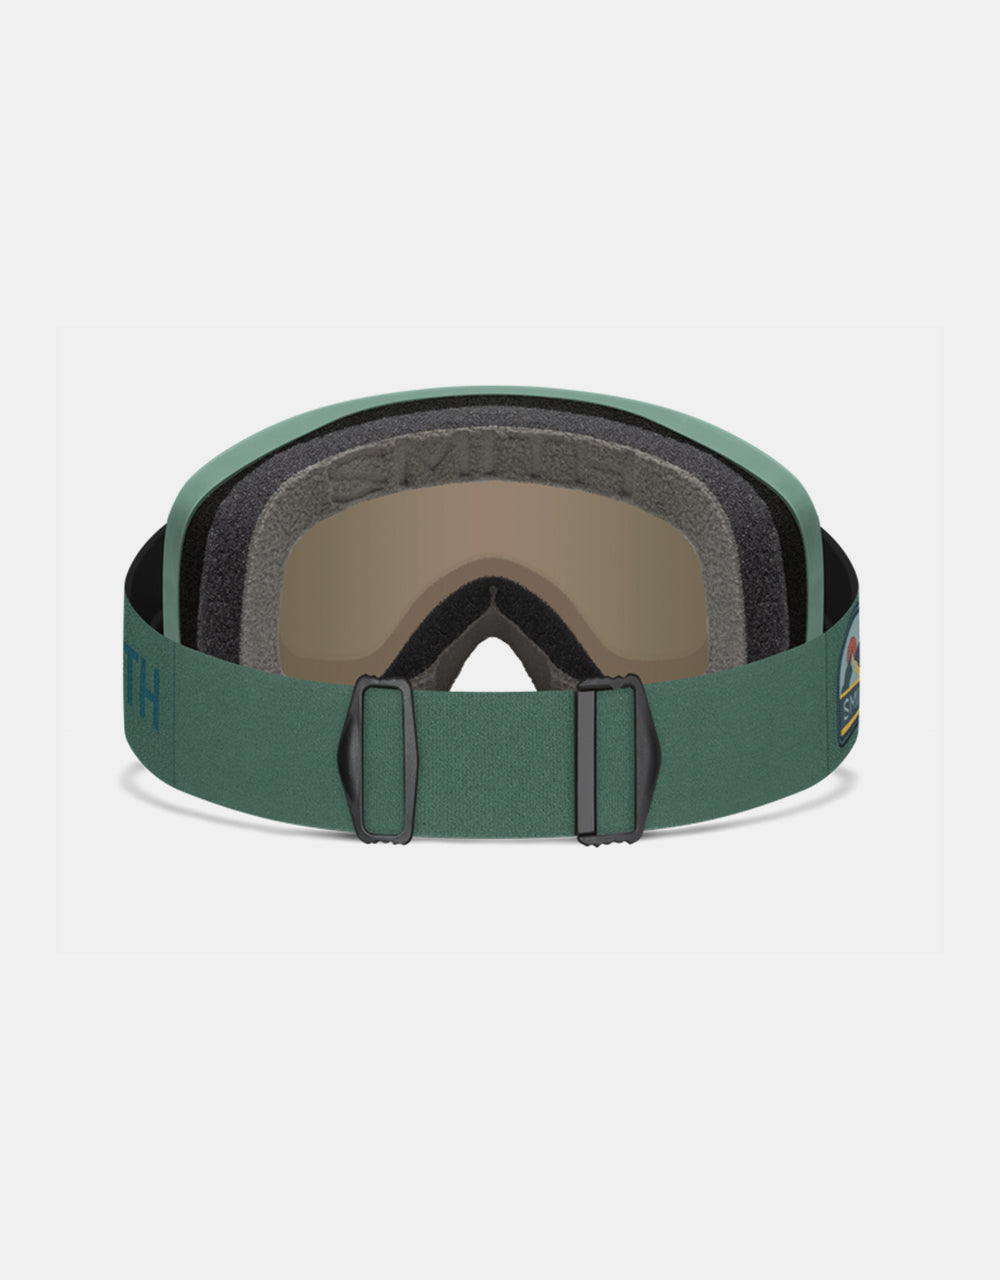 Smith Blazer Snowboard Goggles - Alpine Green/Green Solx Mirror Antifog